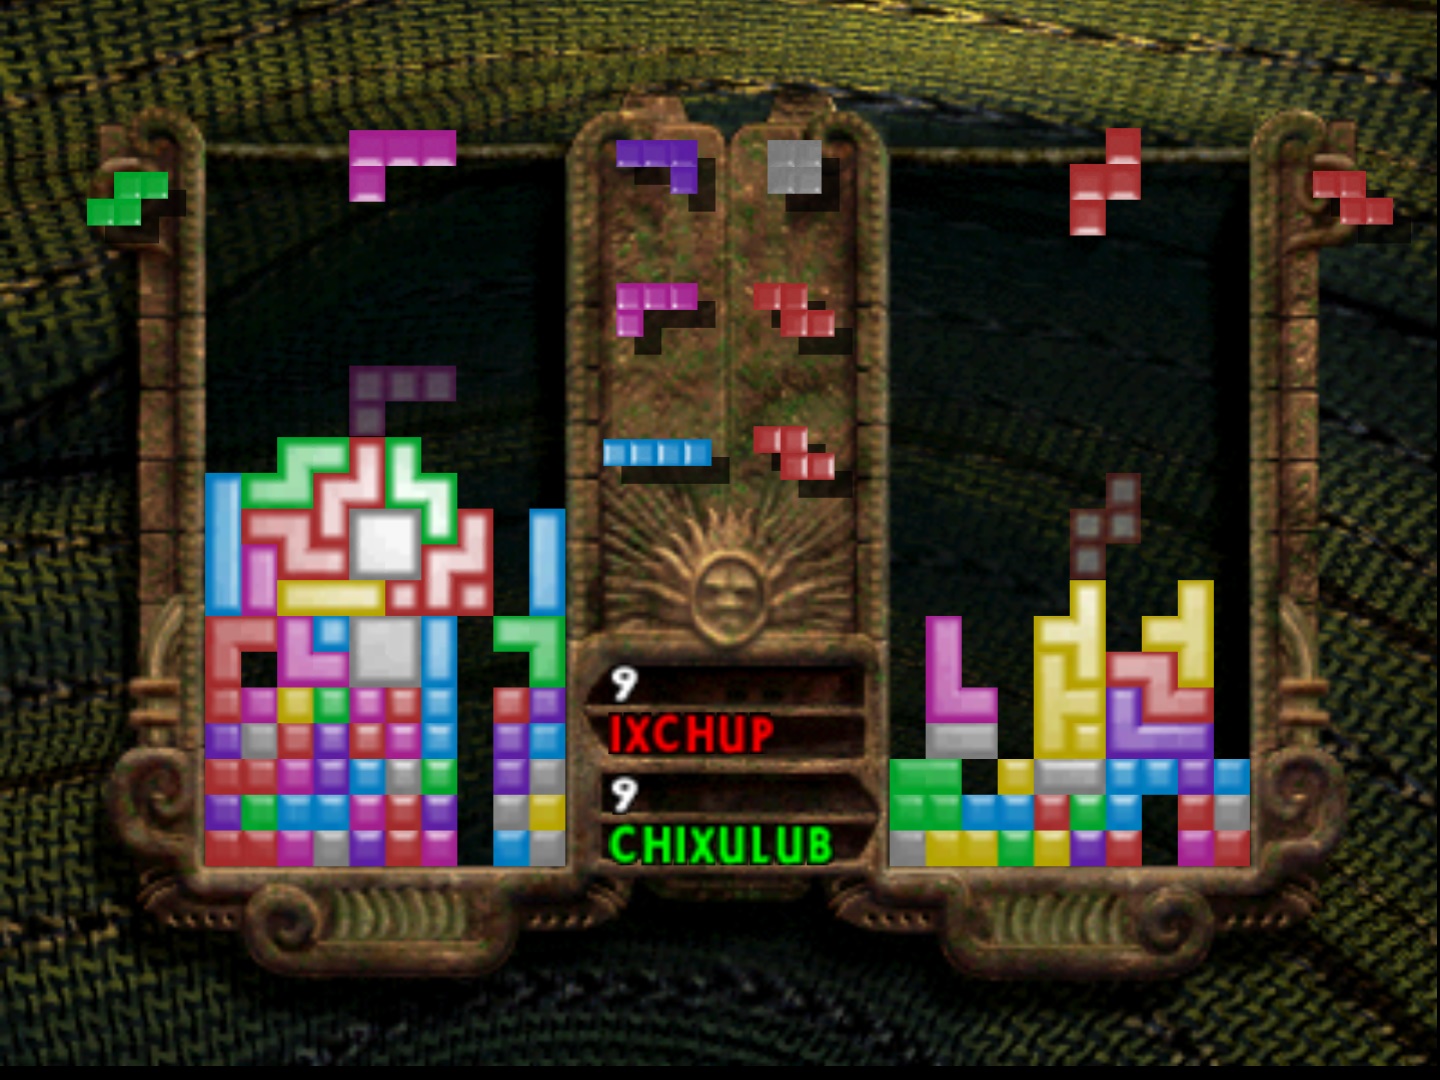 The New Tetris Details LaunchBox Games Database